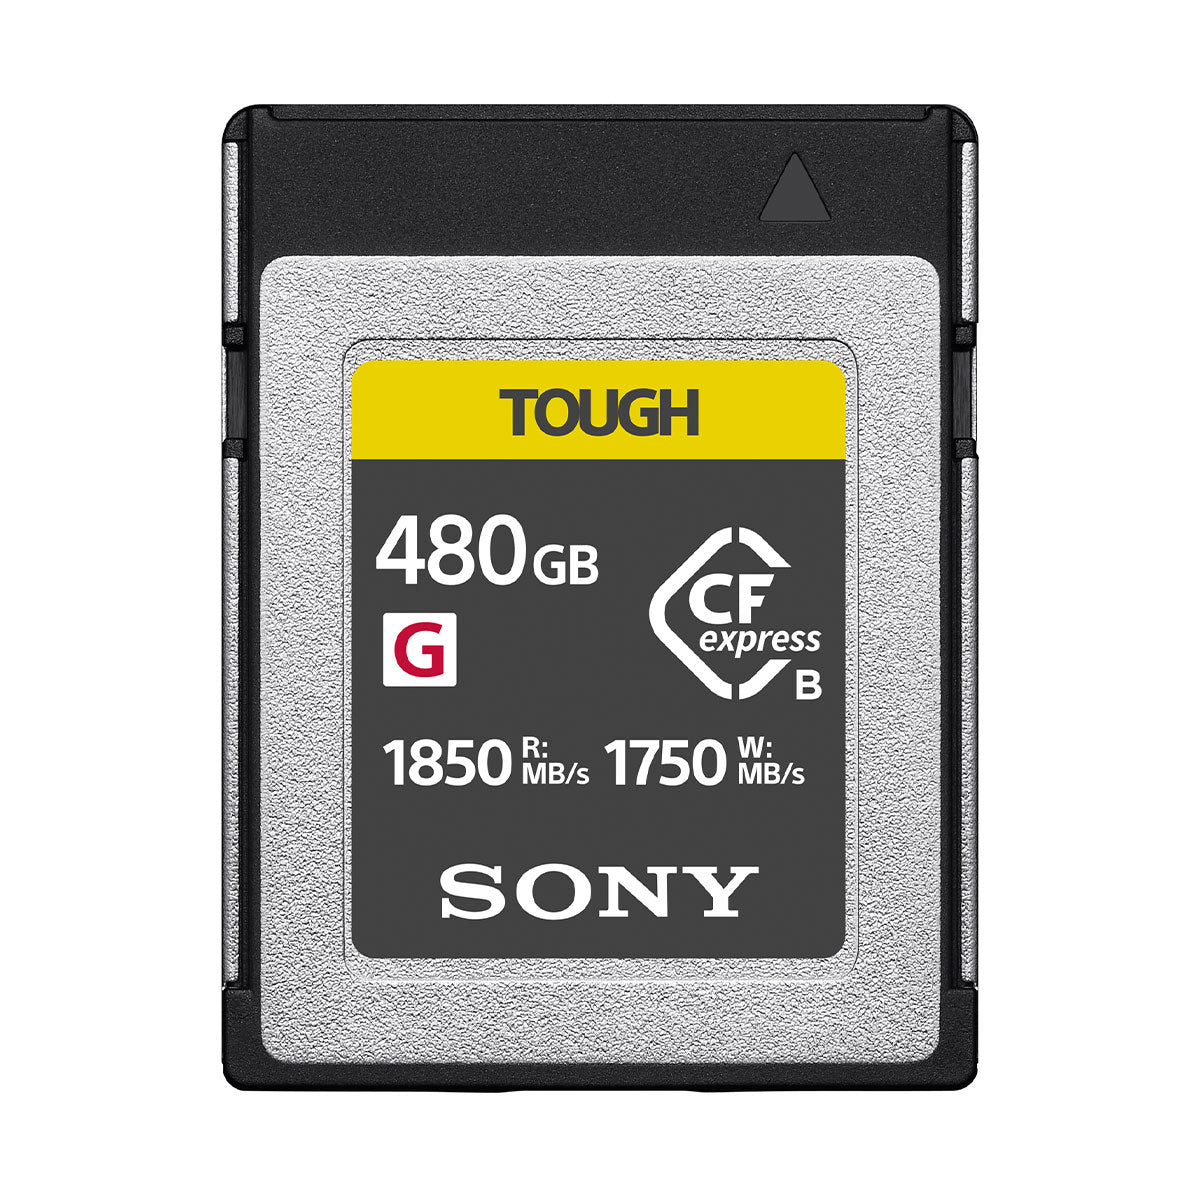 Sony 480GB CFexpress Type B TOUGH Memory Card